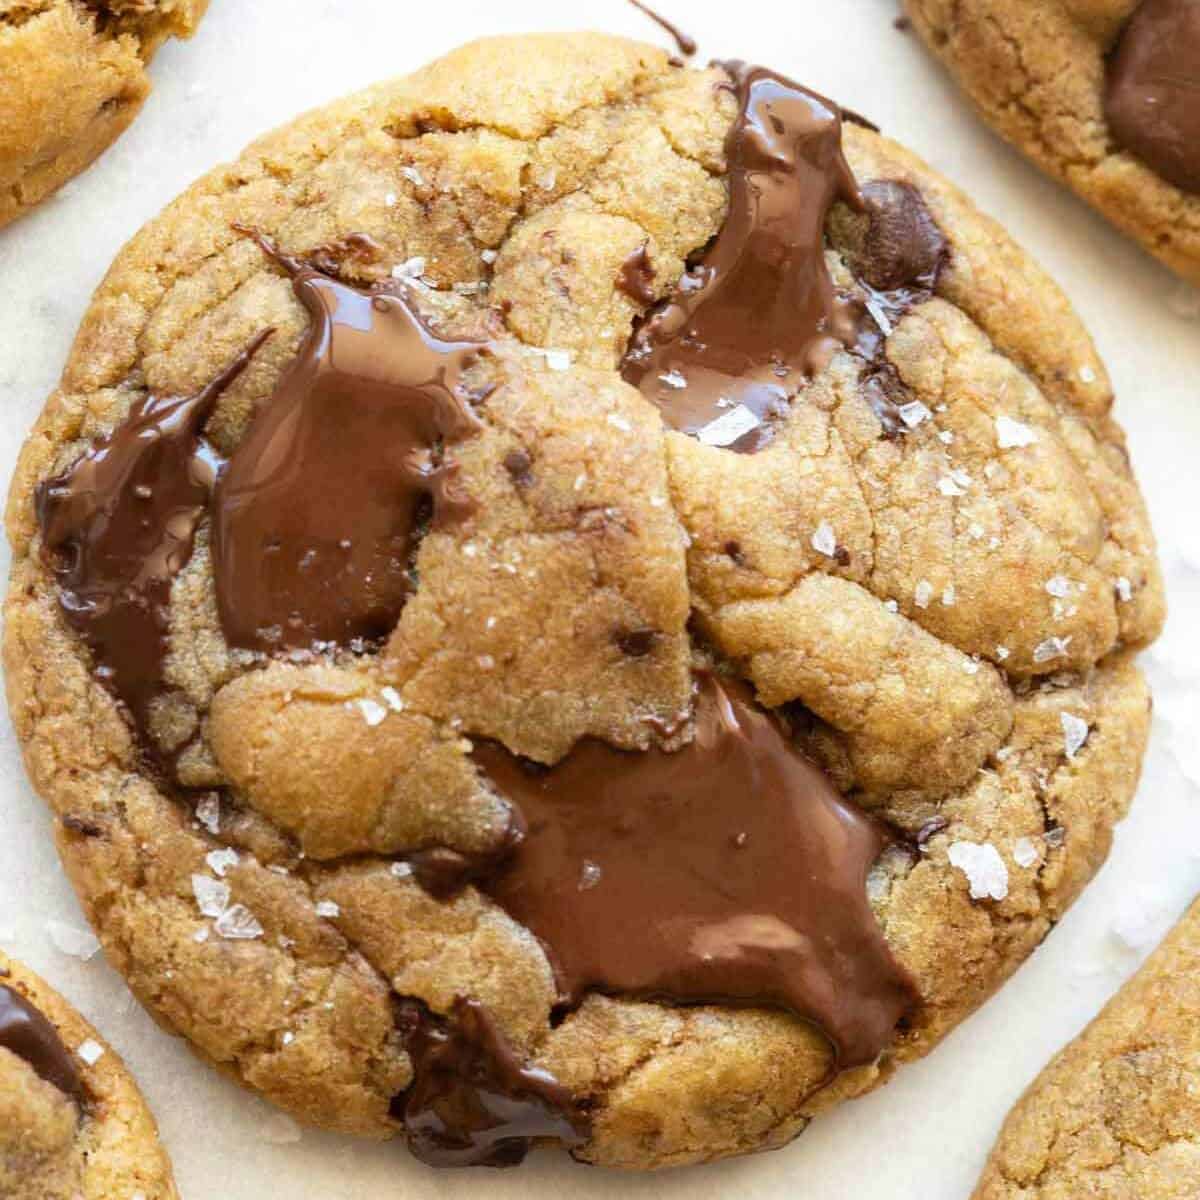 https://thebigmansworld.com/wp-content/uploads/2020/11/vegan-brown-butter-chocolate-chip-cookies-5.jpg